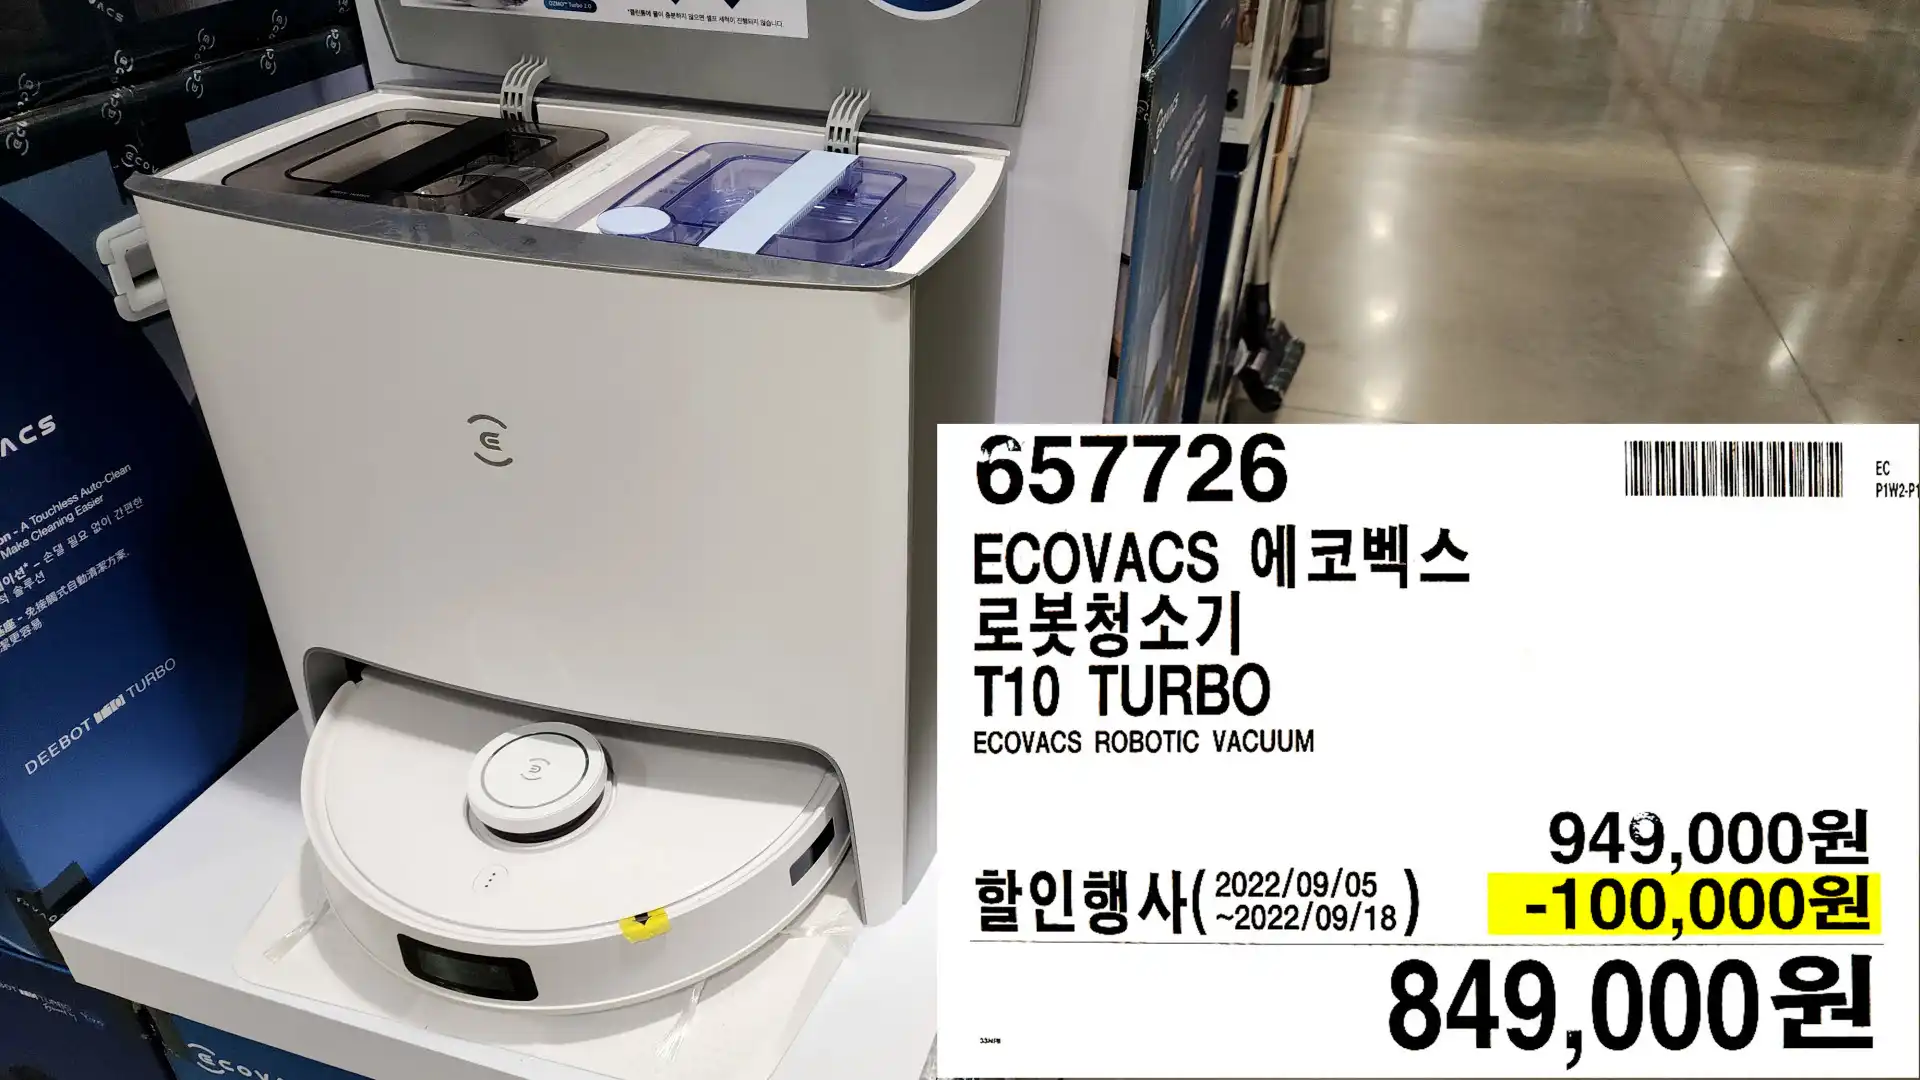 ECOVACS 에코벡스
로봇청소기
T10 TURBO
ECOVACS ROBOTIC VACUUM
849&#44;000원